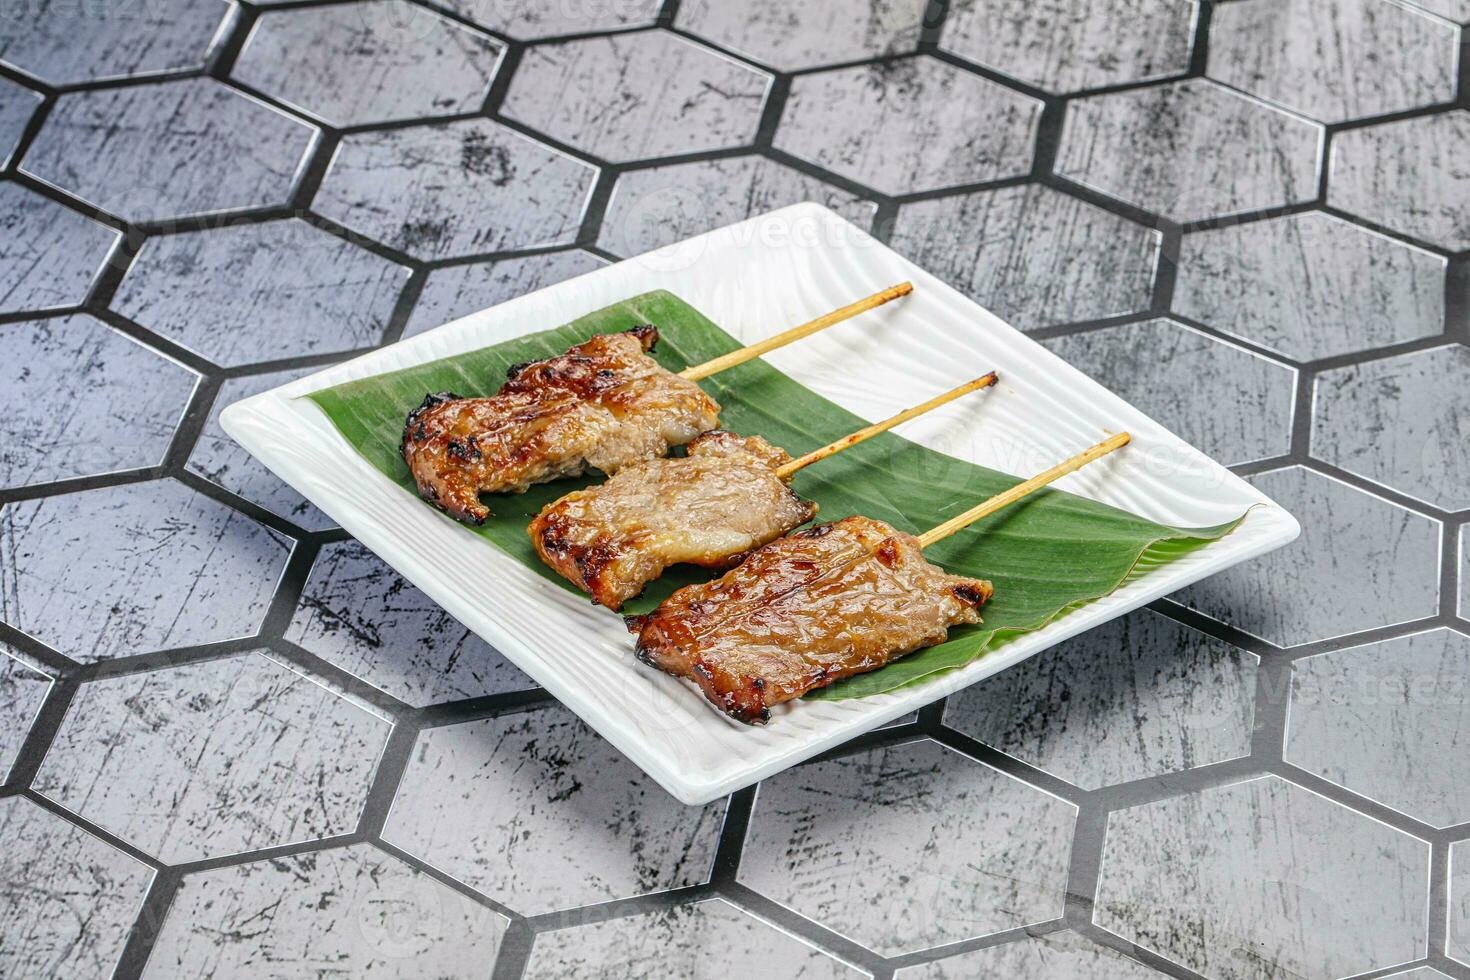 Thai cuisine - grilled pork skewer photo